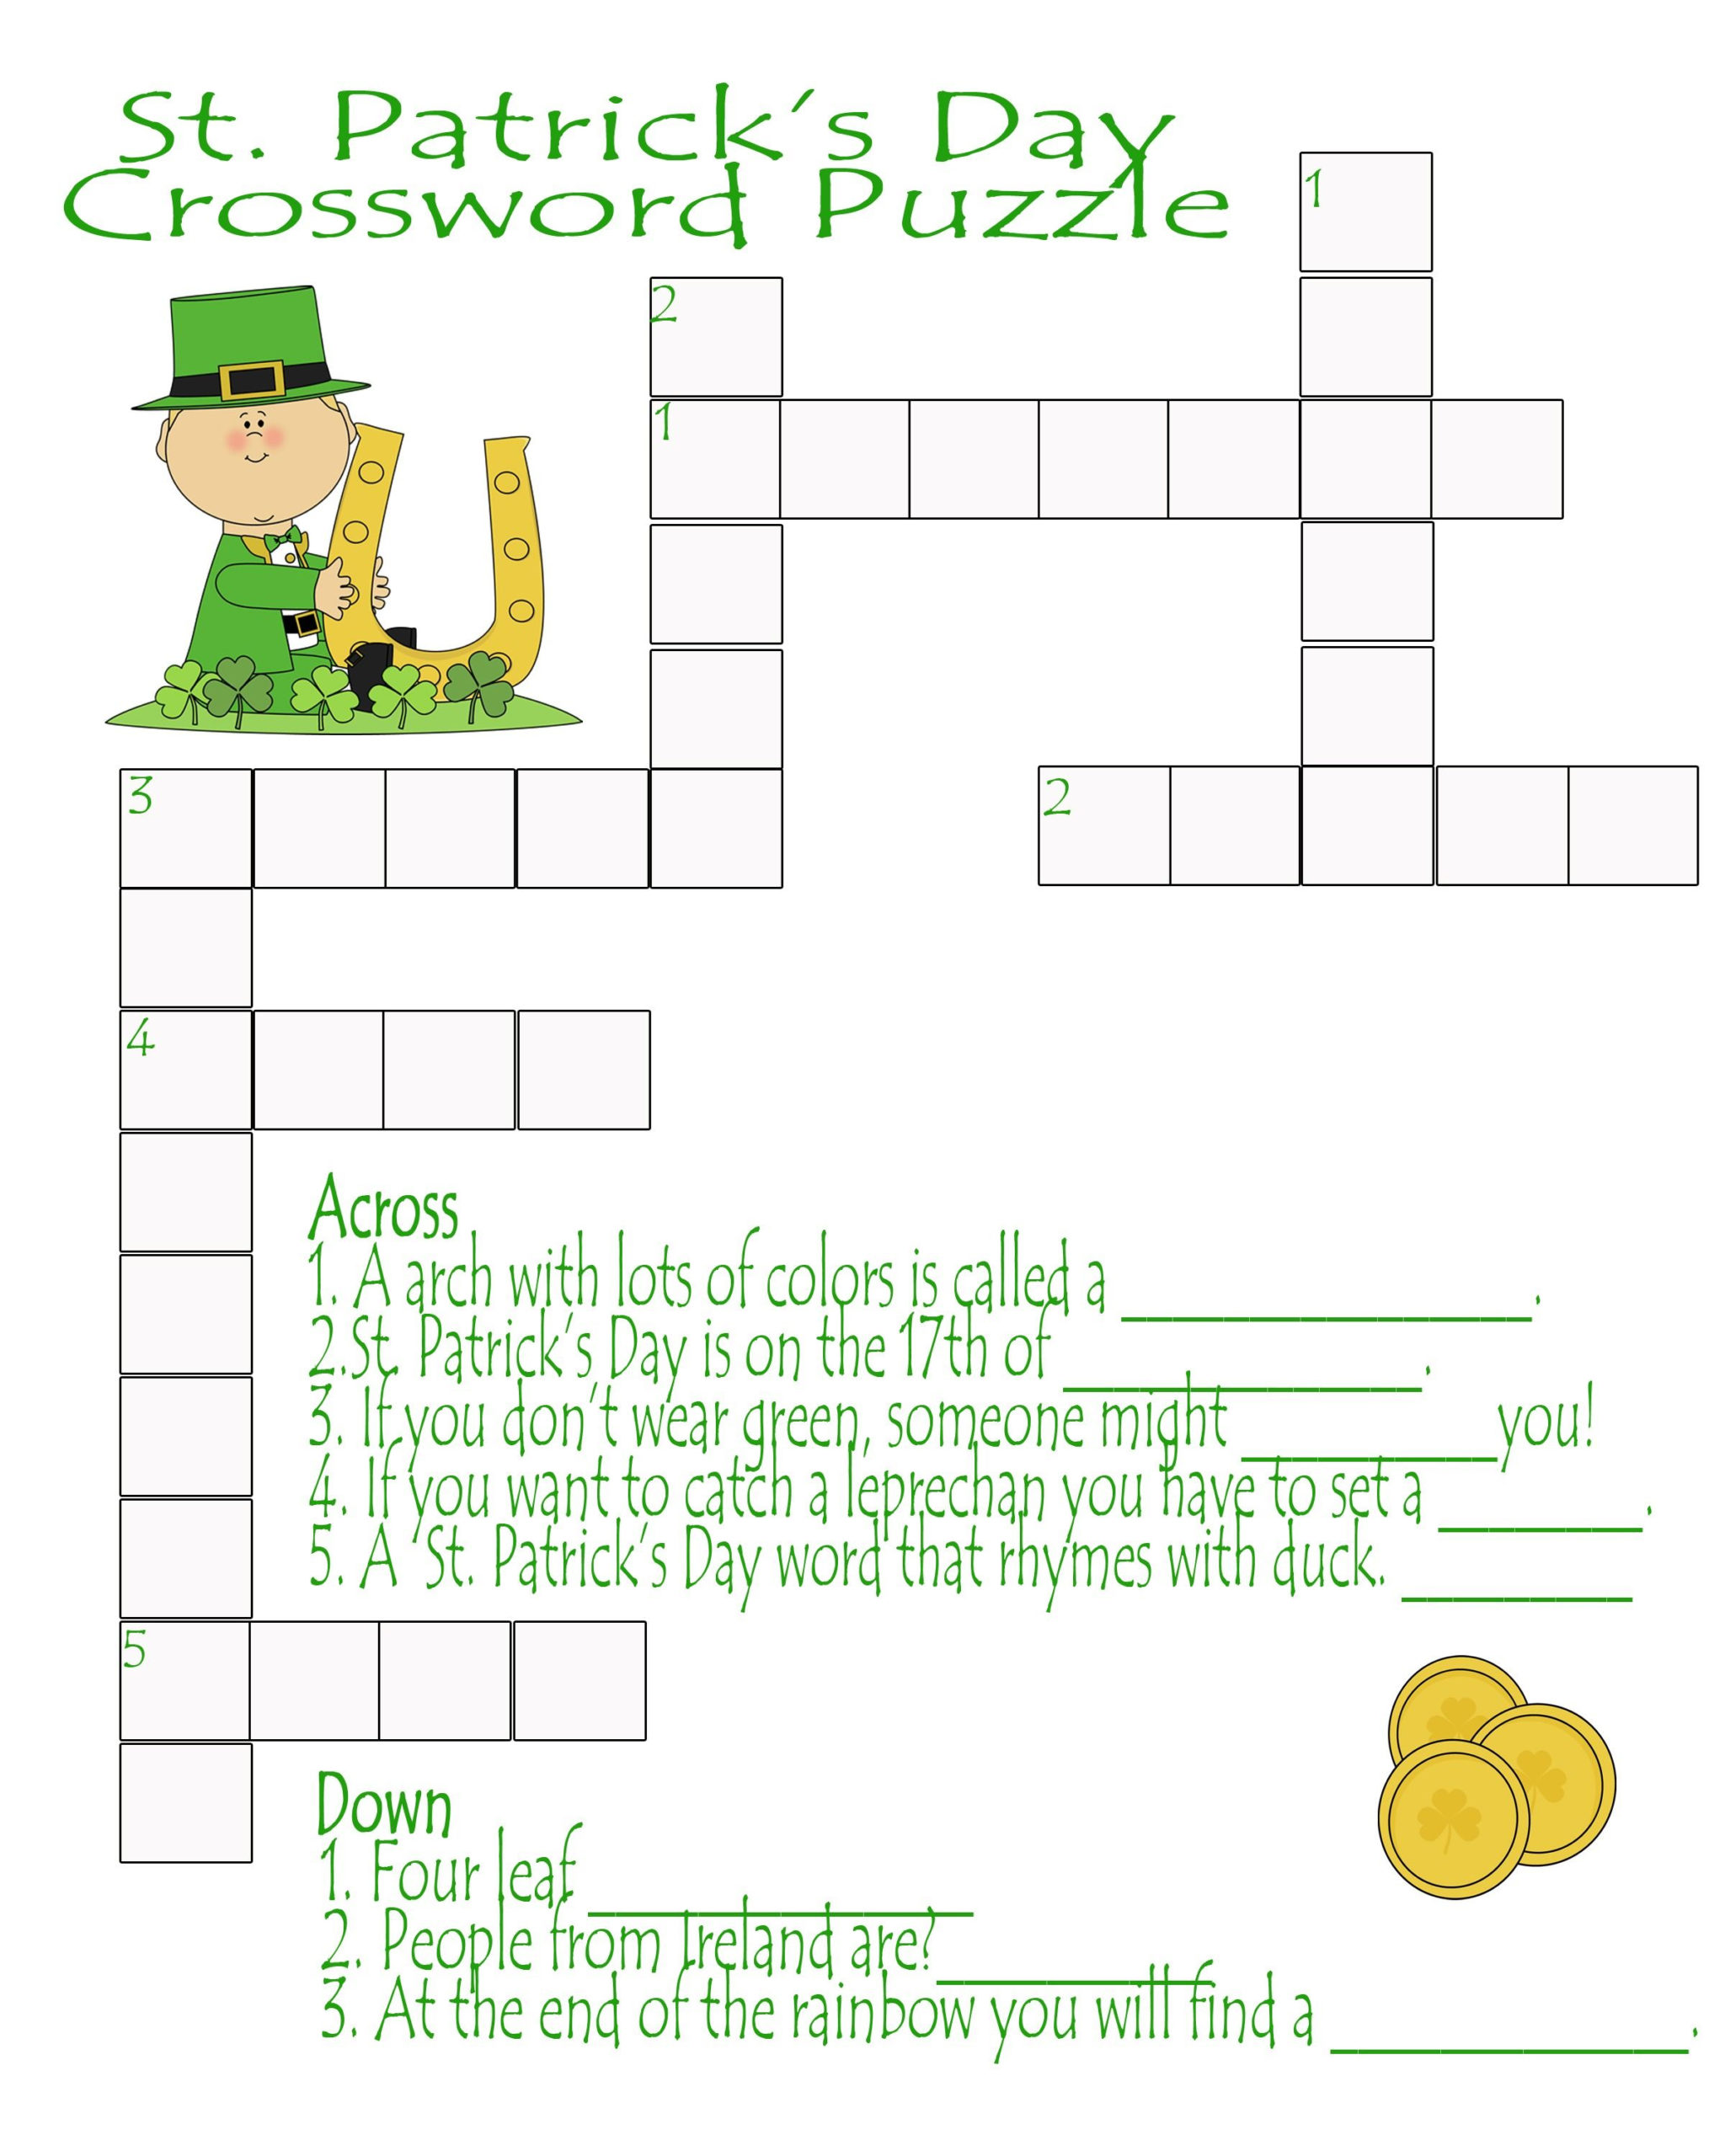 St Patrick's Day 2022 Crossword Puzzle Printable